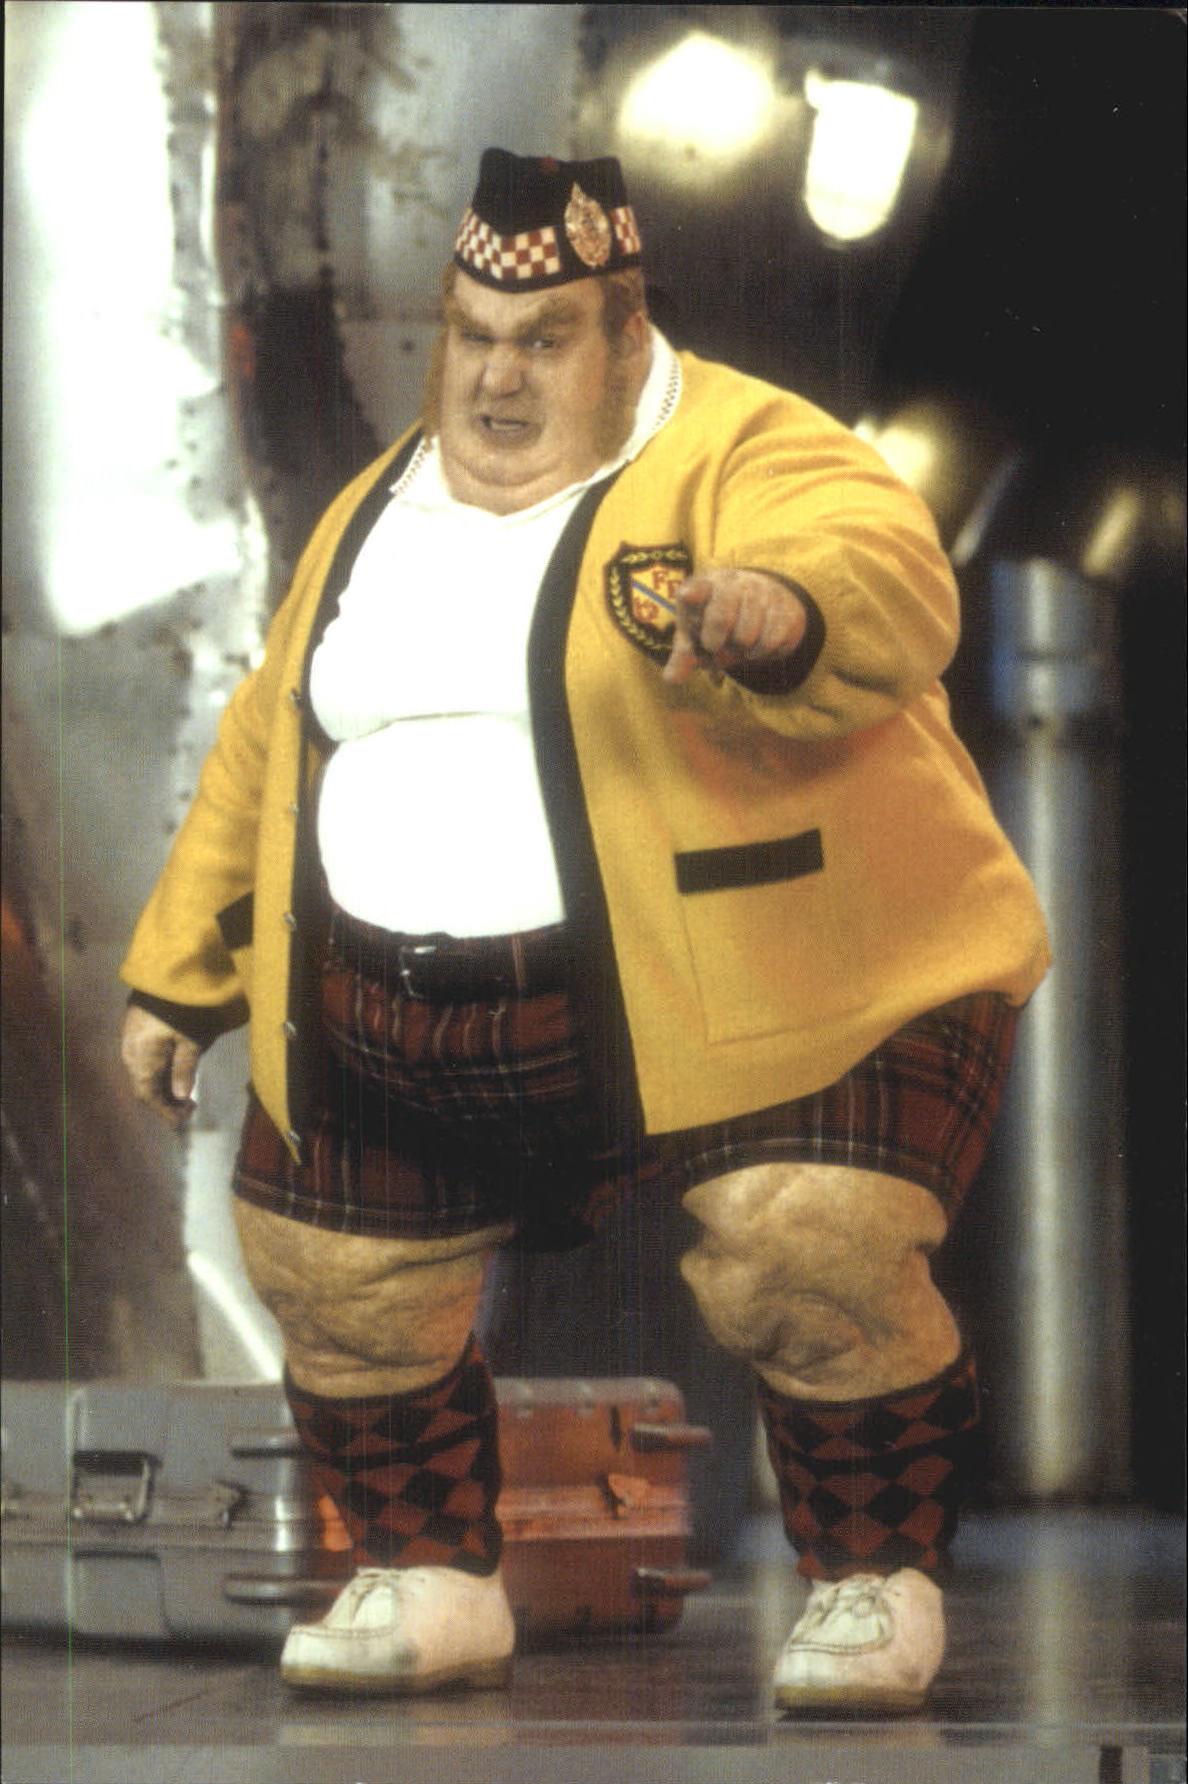 1999 Panini Austin Powers Photocards #71 Fat Bastard in yellow wants you